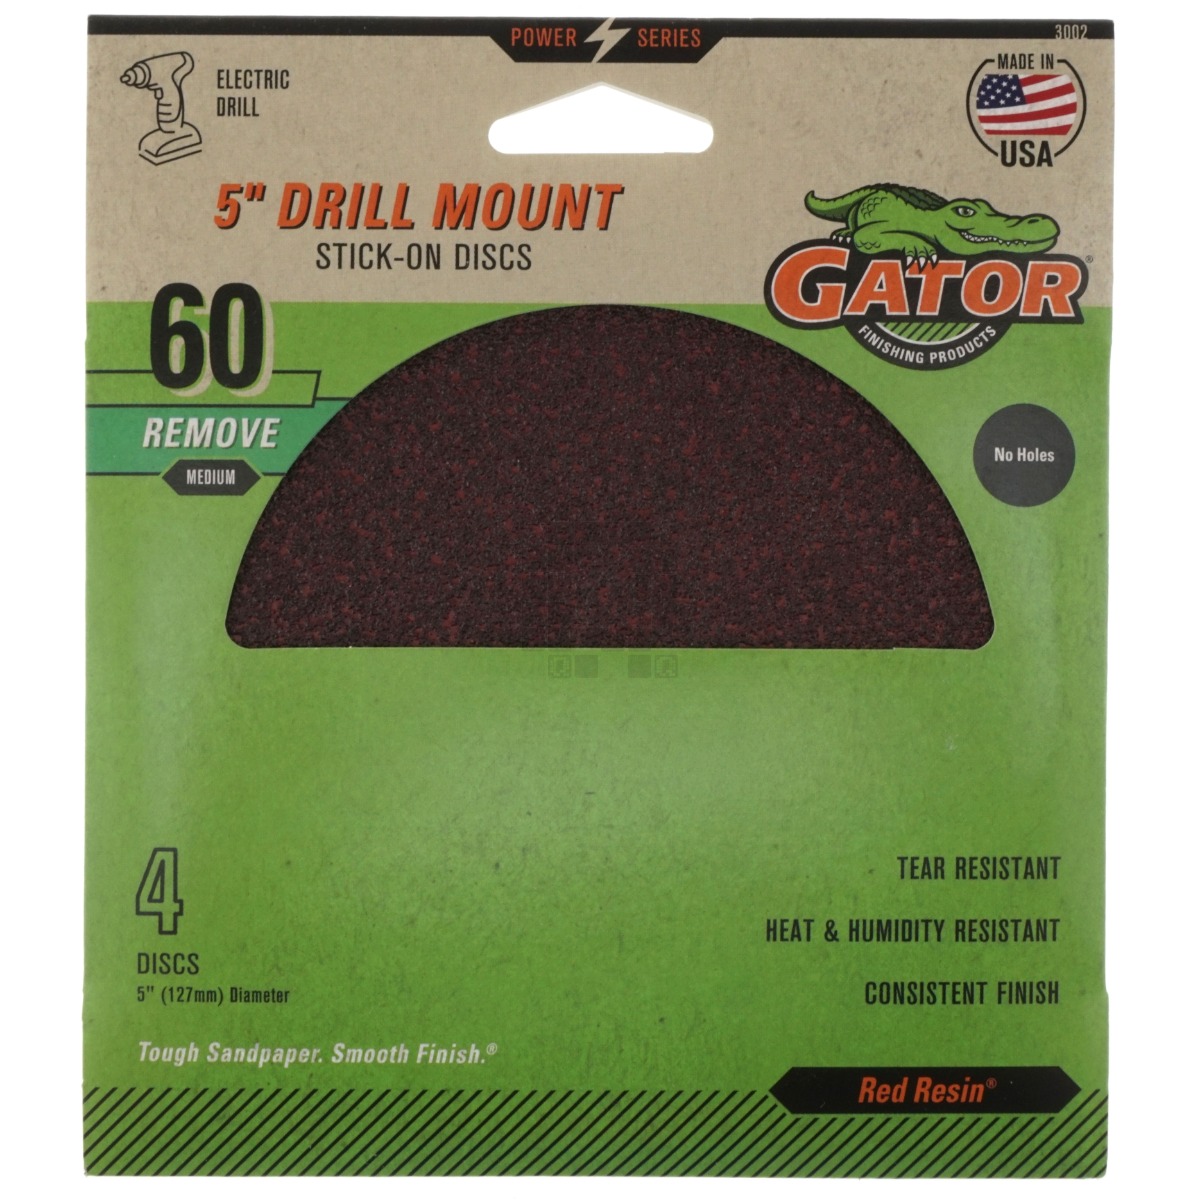 Gator 3002 5" Drill Mount Stick-On Discs, Medium 60 Grit, No Holes, 4 Pack